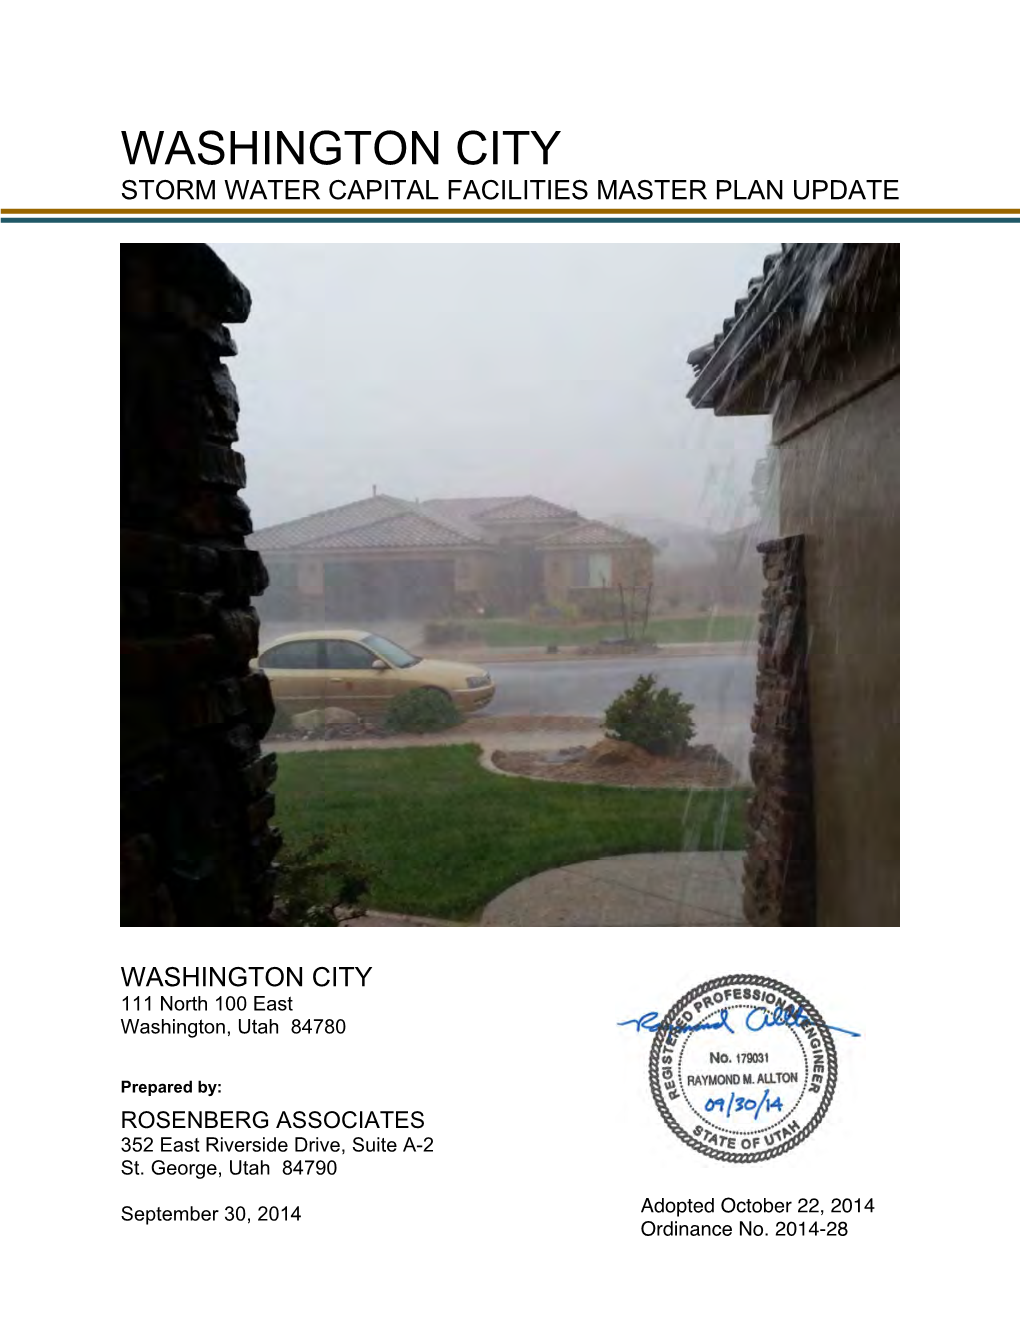 Storm Water Capital Facilities Master Plan Update